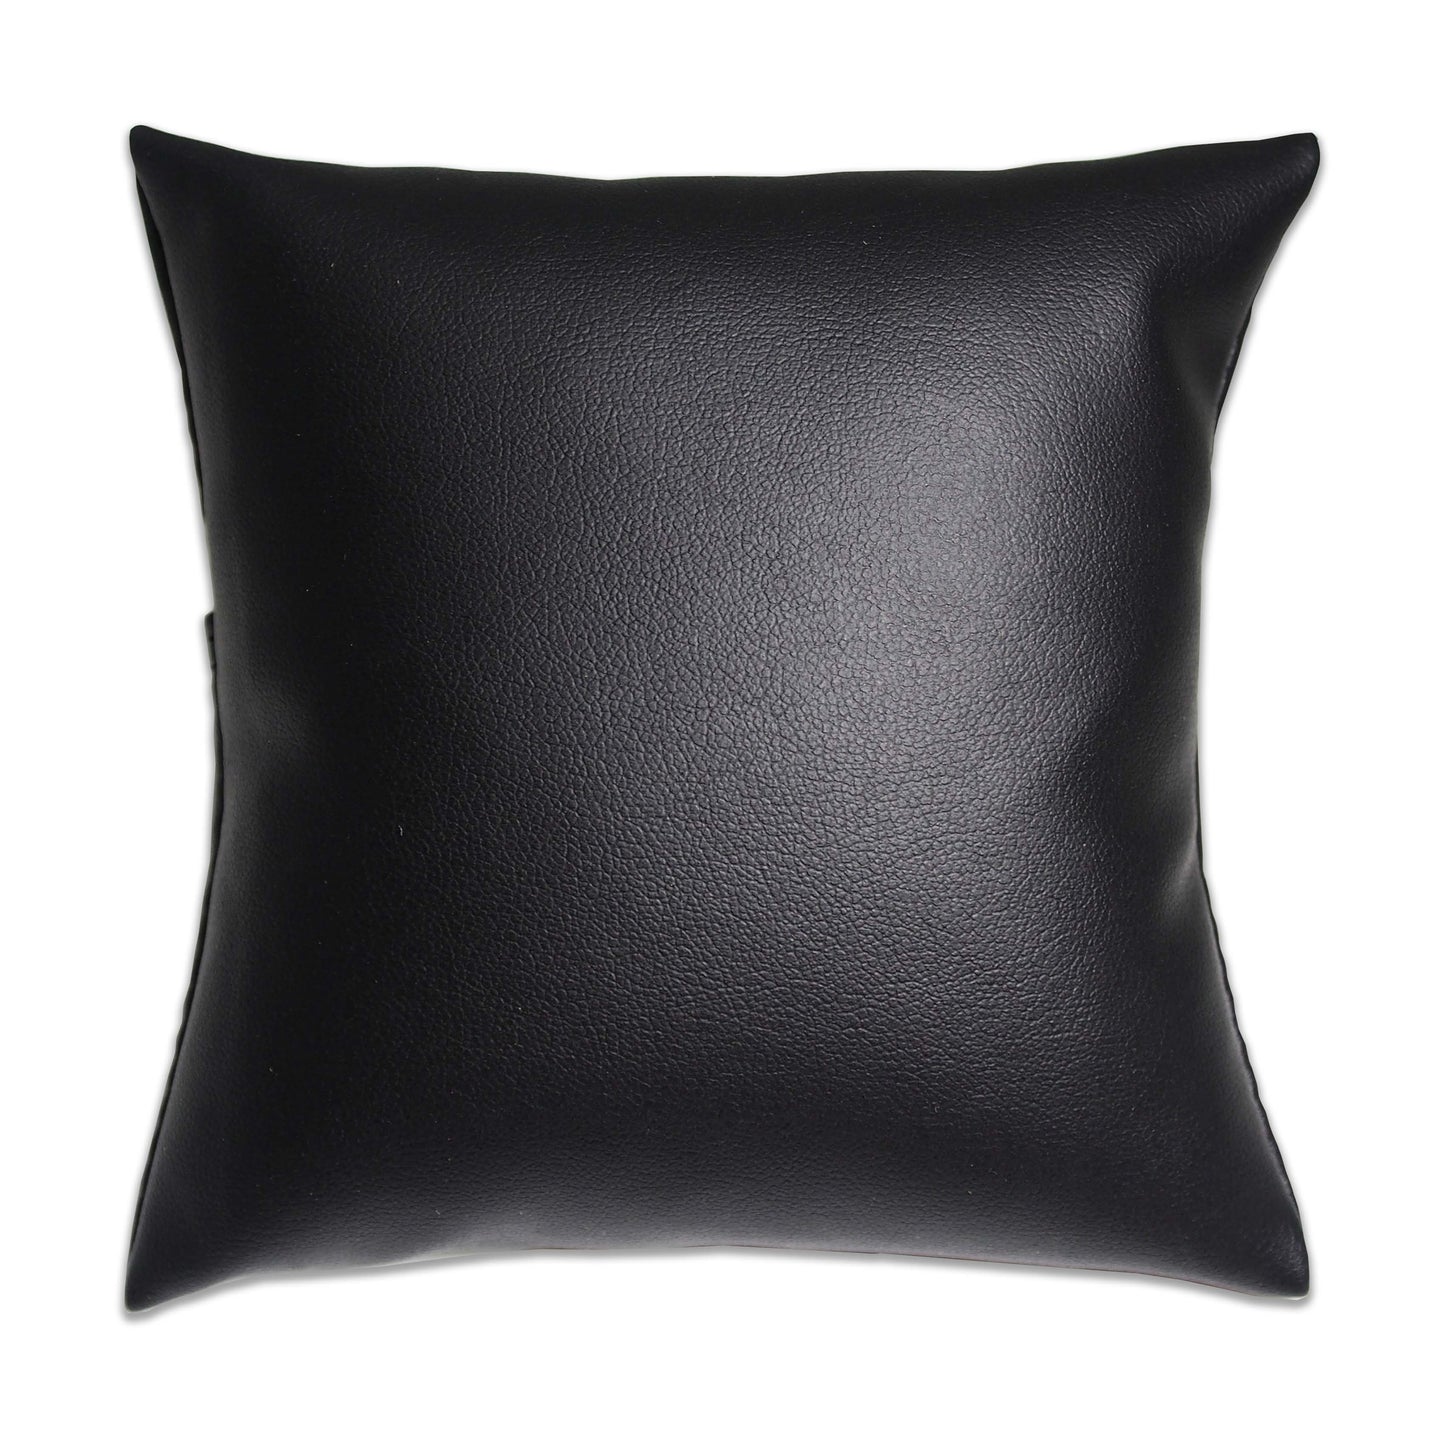 4" Black Leatherette Pillow Displays